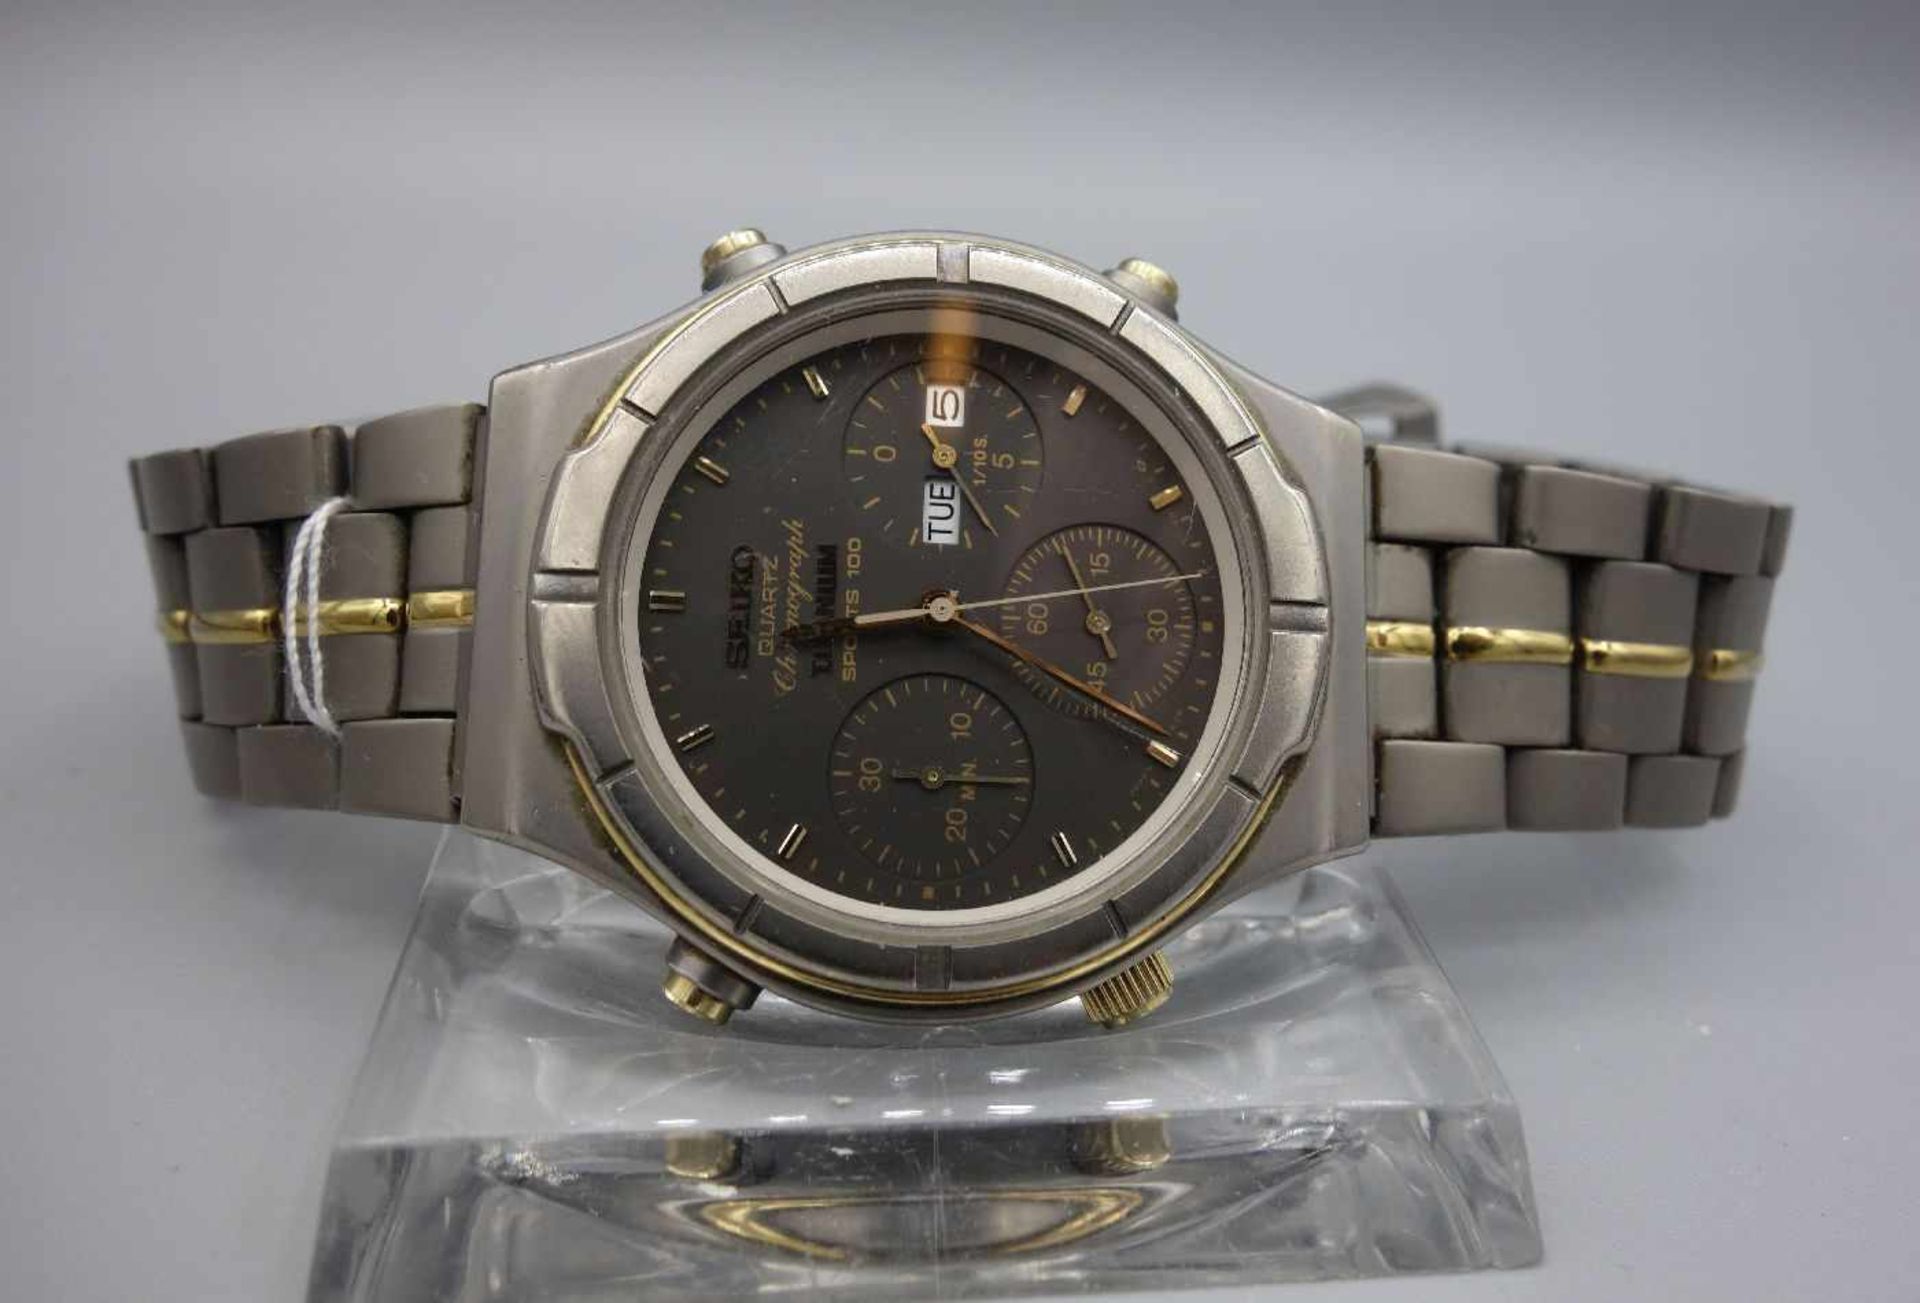 ARMBANDUHR: SEIKO CHRONOGRAPH TITANIUM SPORTS 100 / wristwatch, Japan, Quartz. Stahlgehäuse und